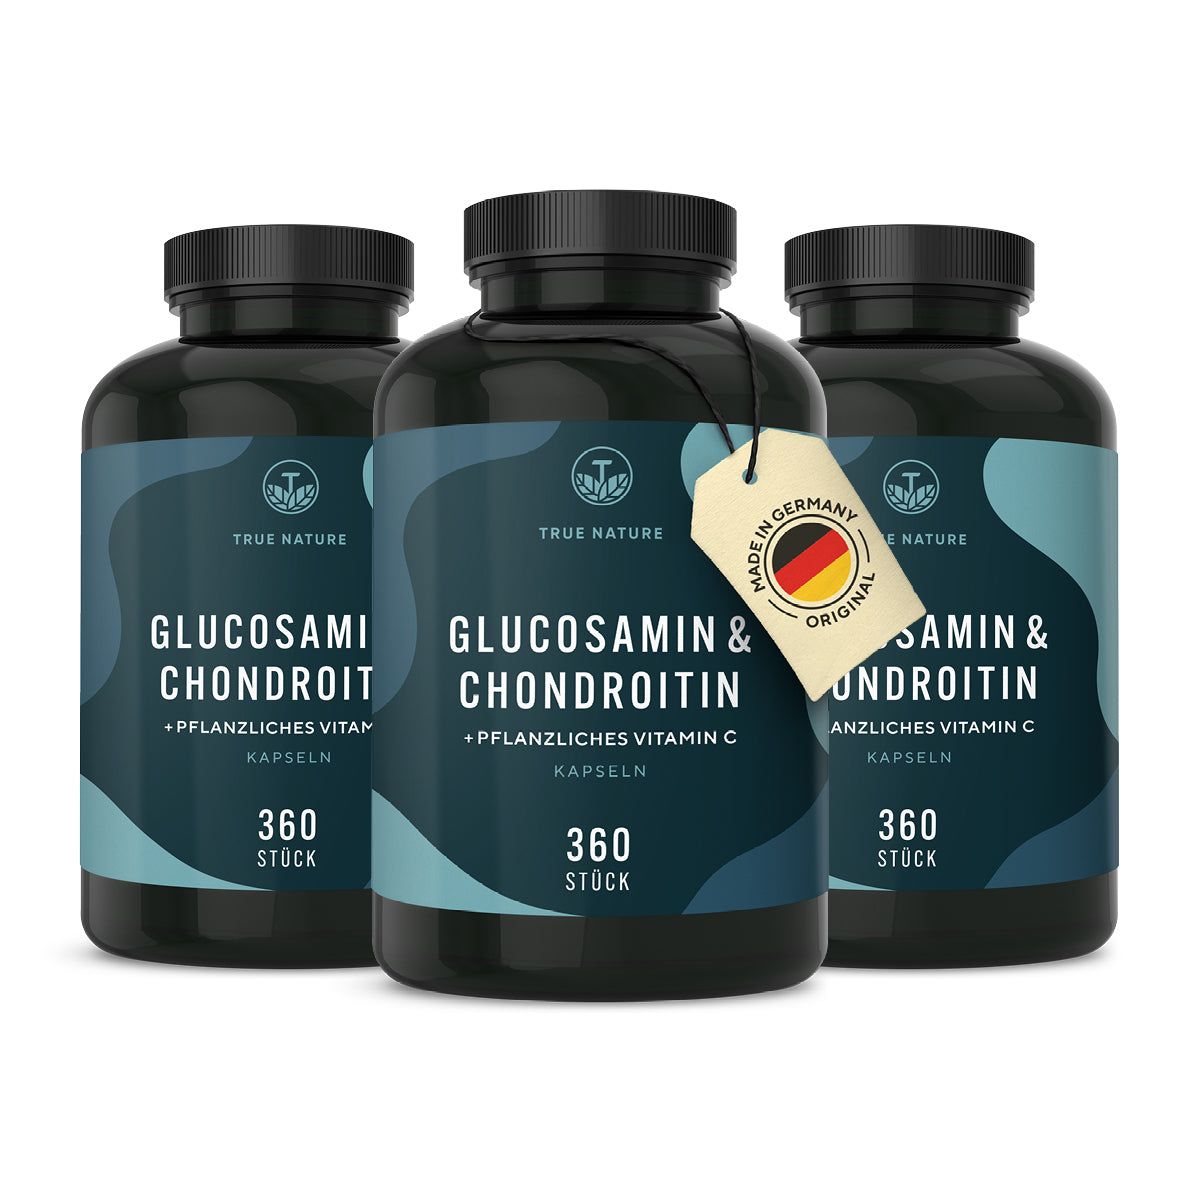 True Nature® Glucosamin & Chondroitin Kapseln mit Vitamin C